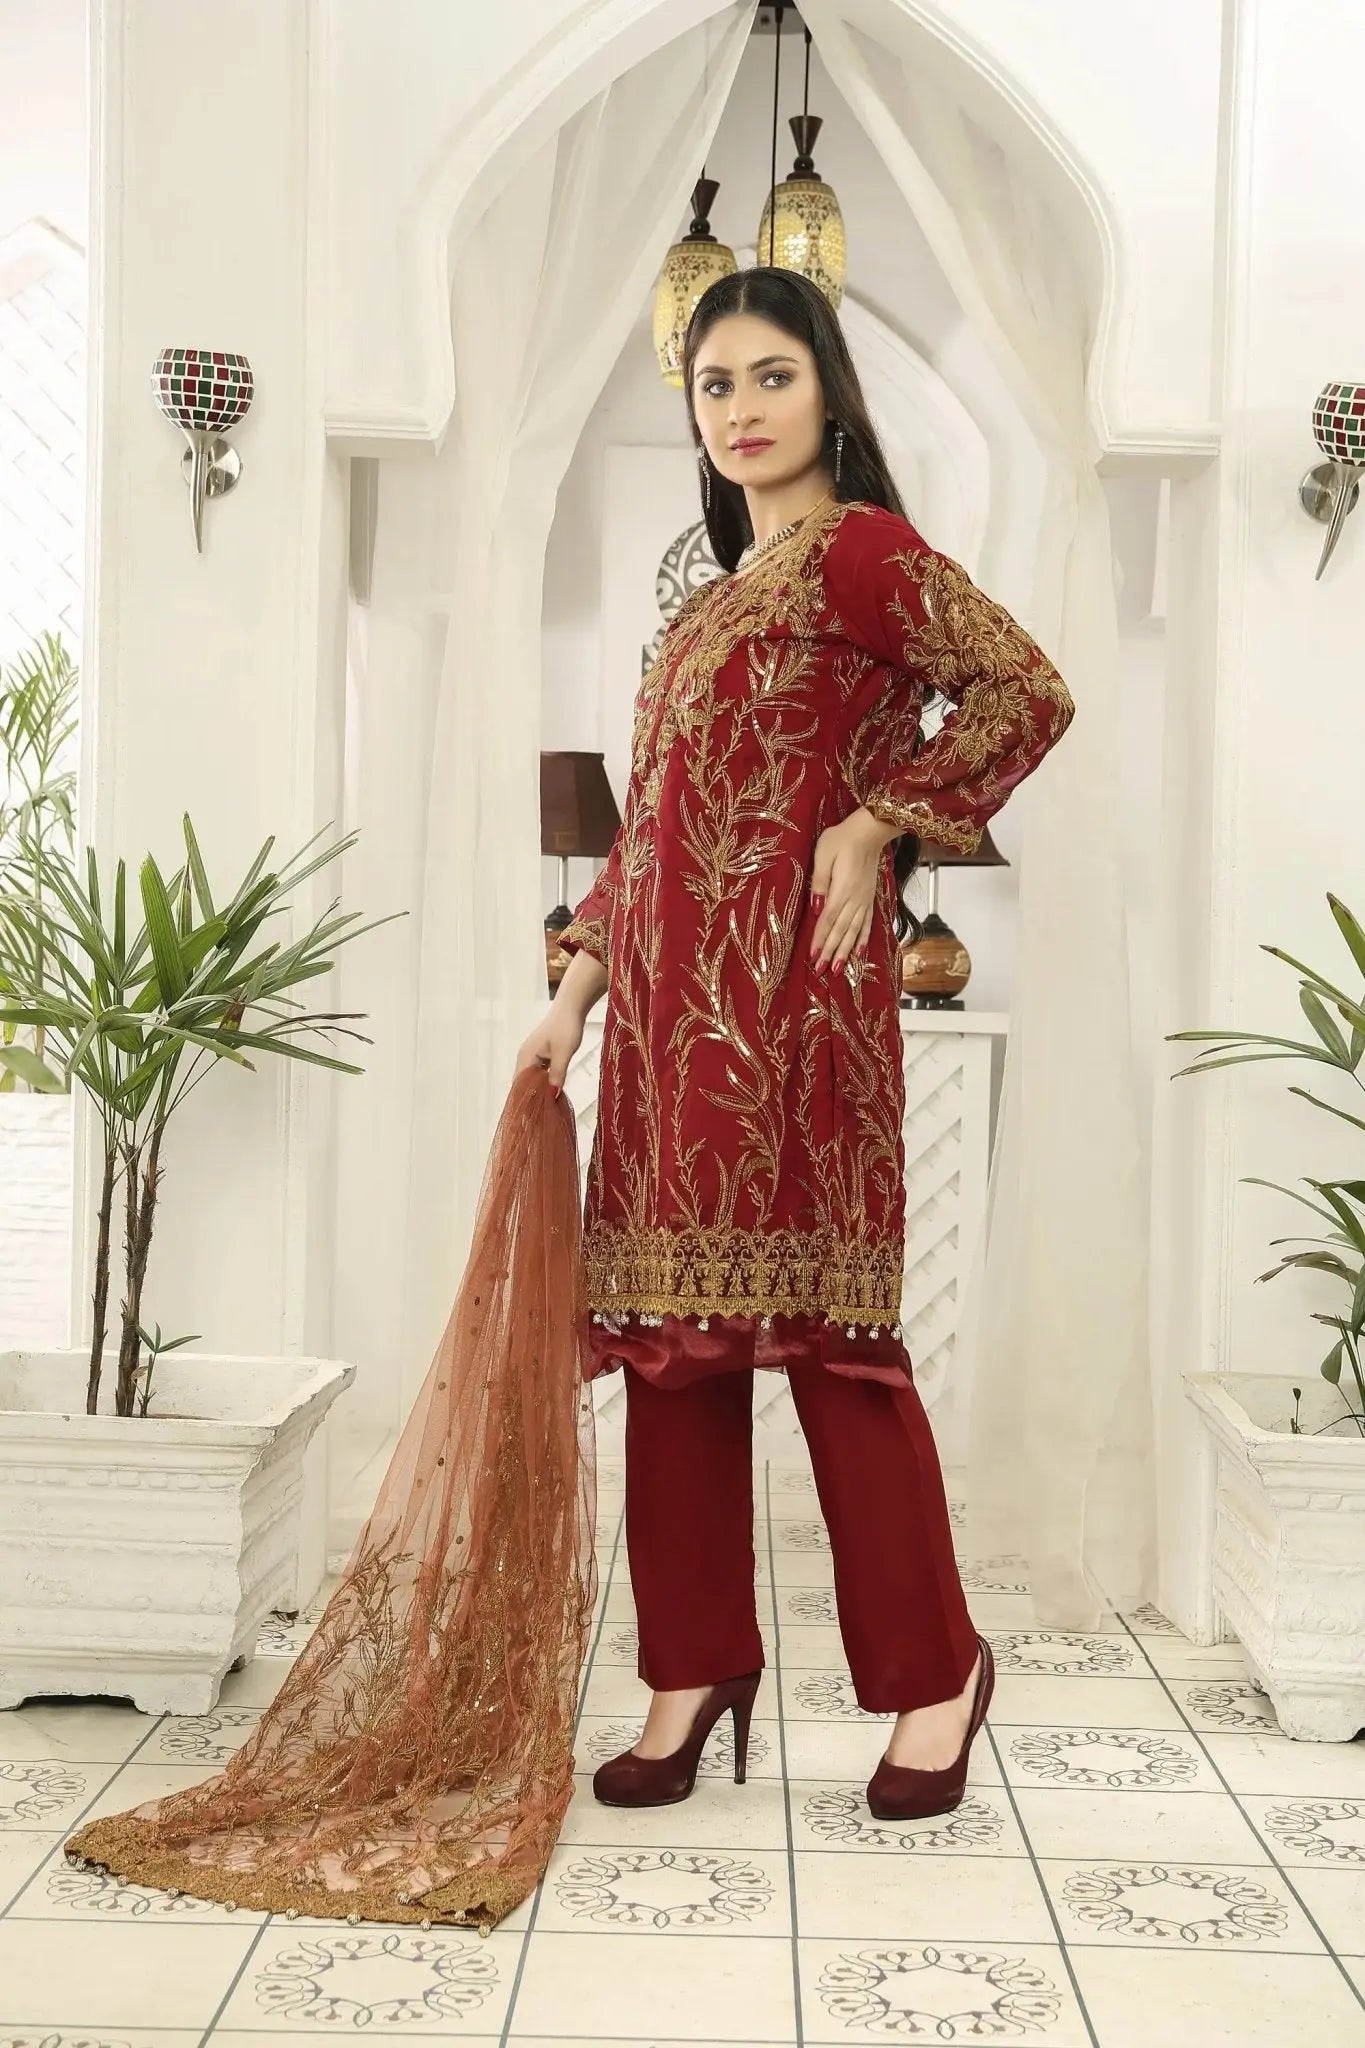 IshDeena Indian Dresses for Women Party Wear Suits Pakistani Formal Wedding Outfits - IshDeena